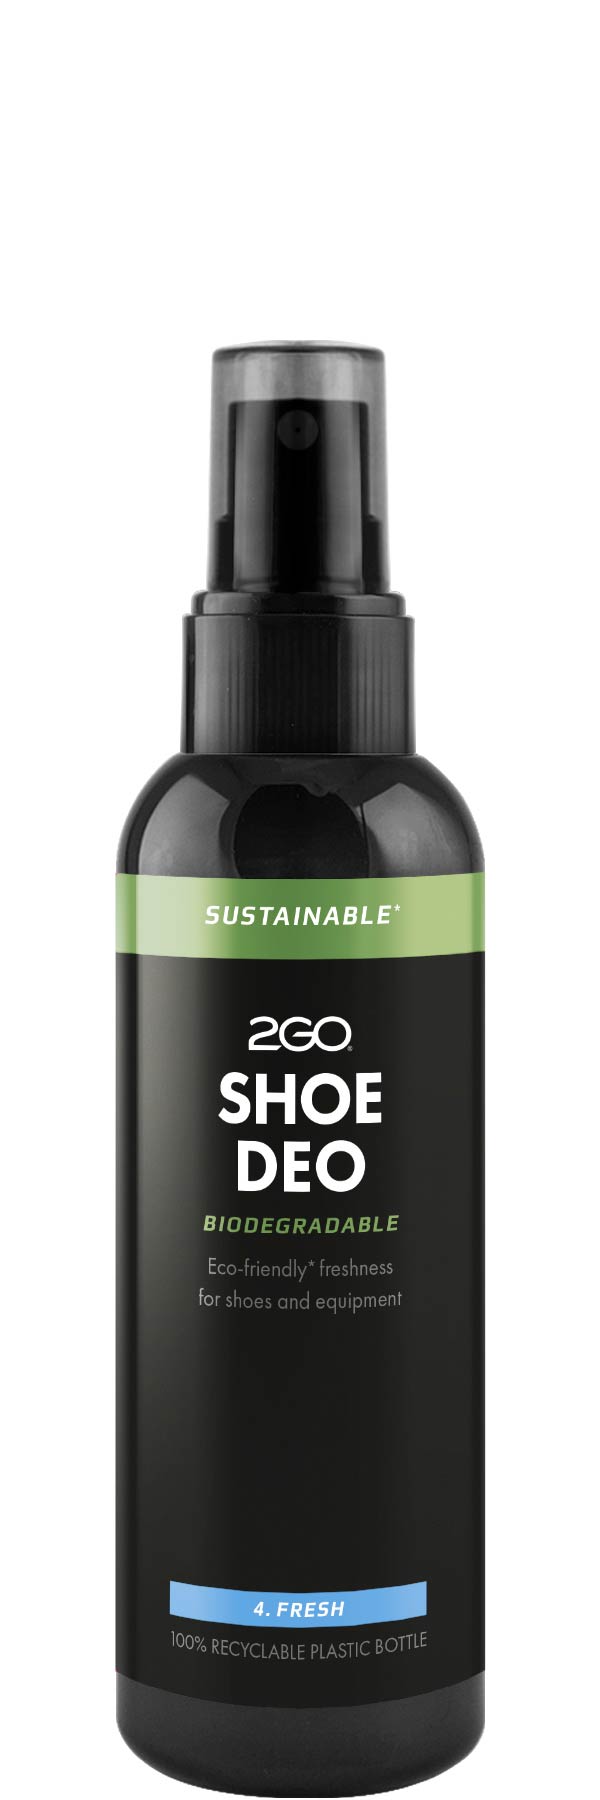 Se 2GO Sustainable Shoe Deo hos Skobox